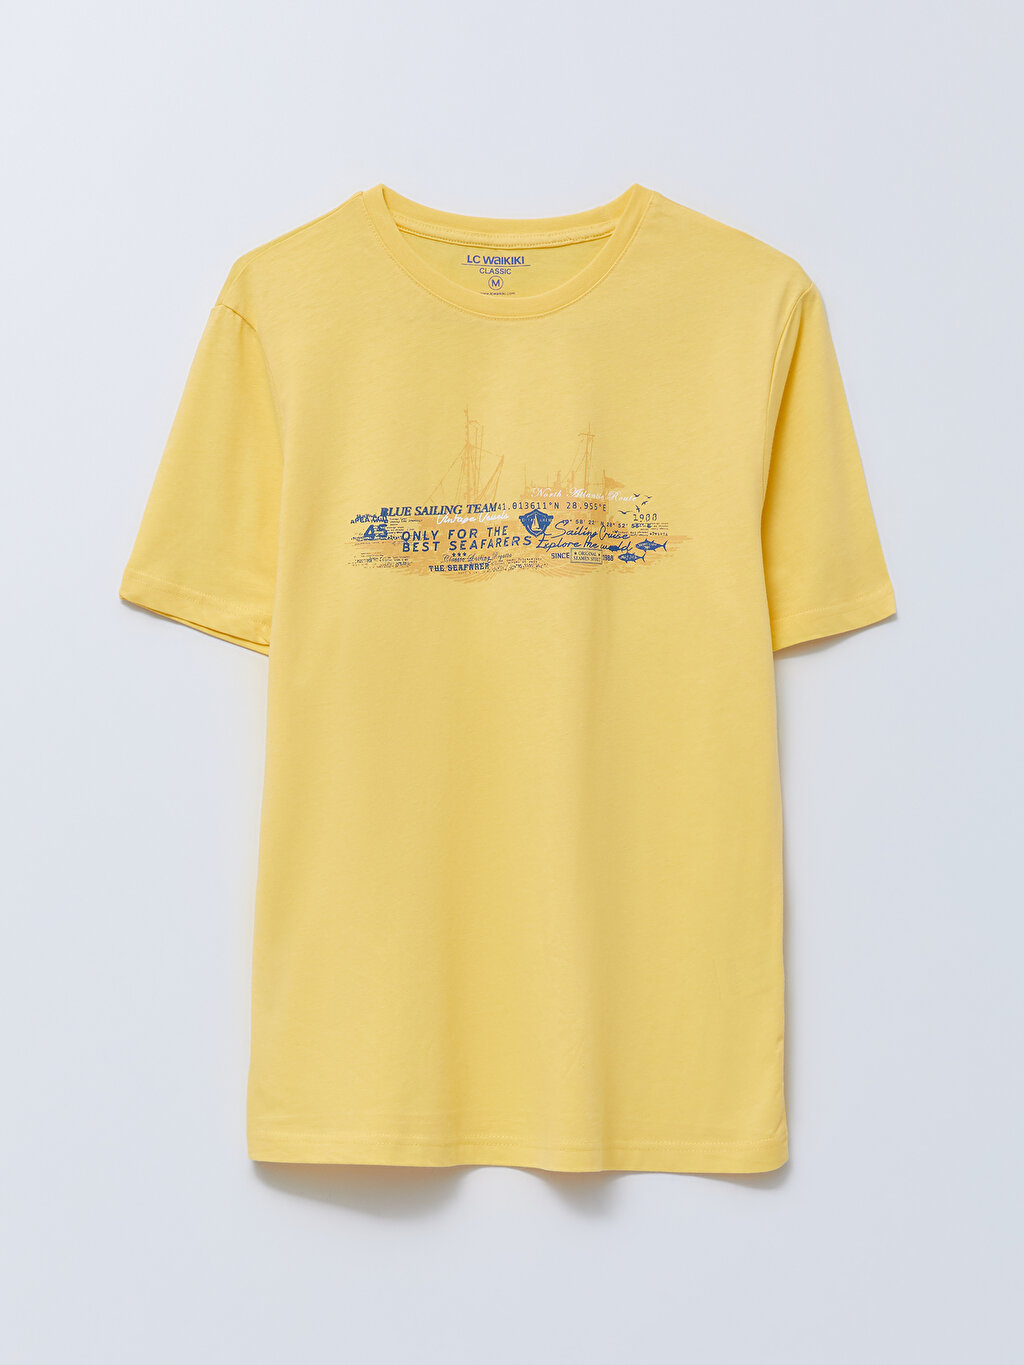 Crew Neck Short Sleeve Printed Combed Cotton Mens T Shirt S2dl46z8 Qn4 S2dl46z8 Qn4 Lc Waikiki 